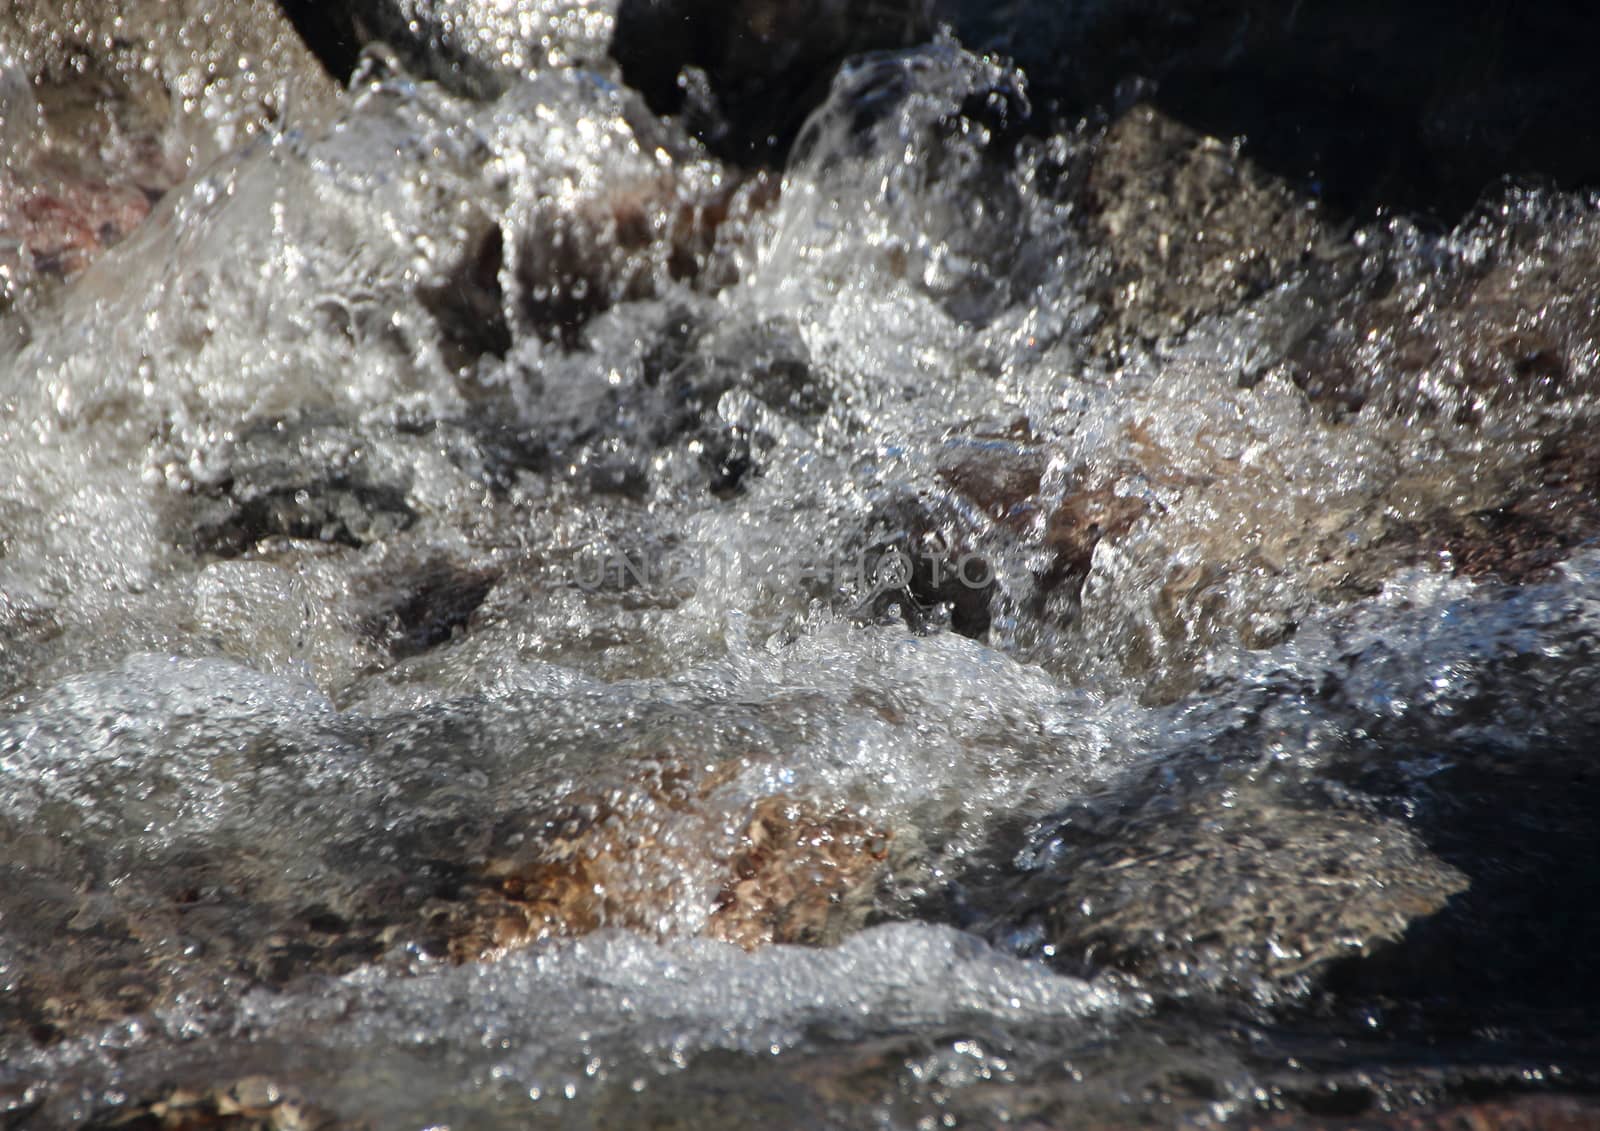 White Water River Splash Stream on Rocks from Melting Show On Mountain